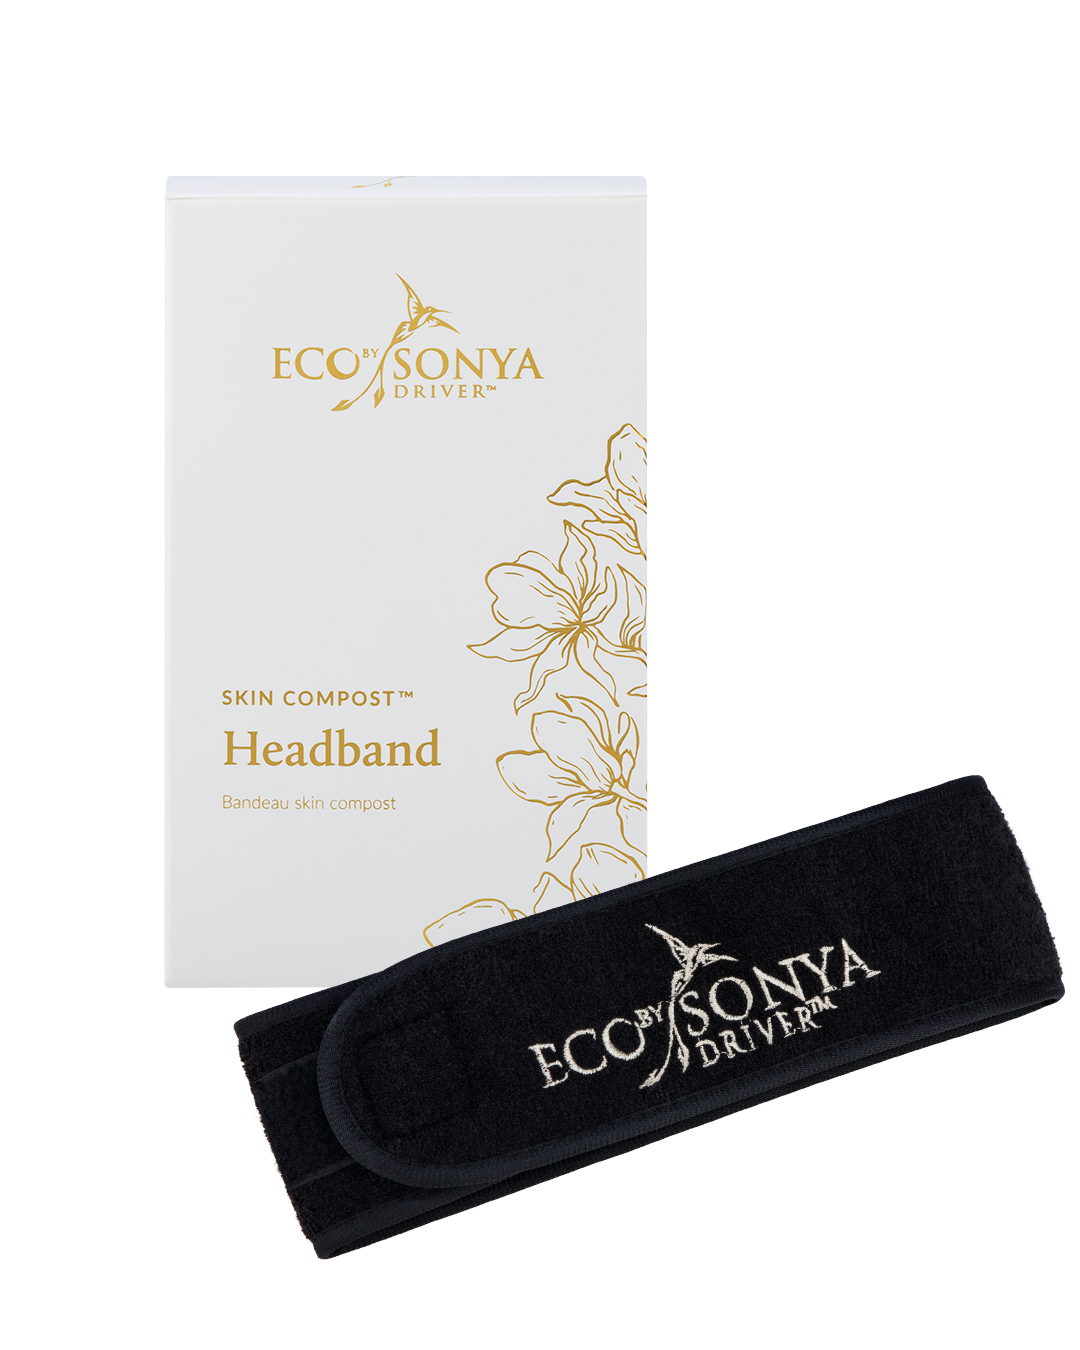 Eco by Sonya Driver - Skin Compost Headband